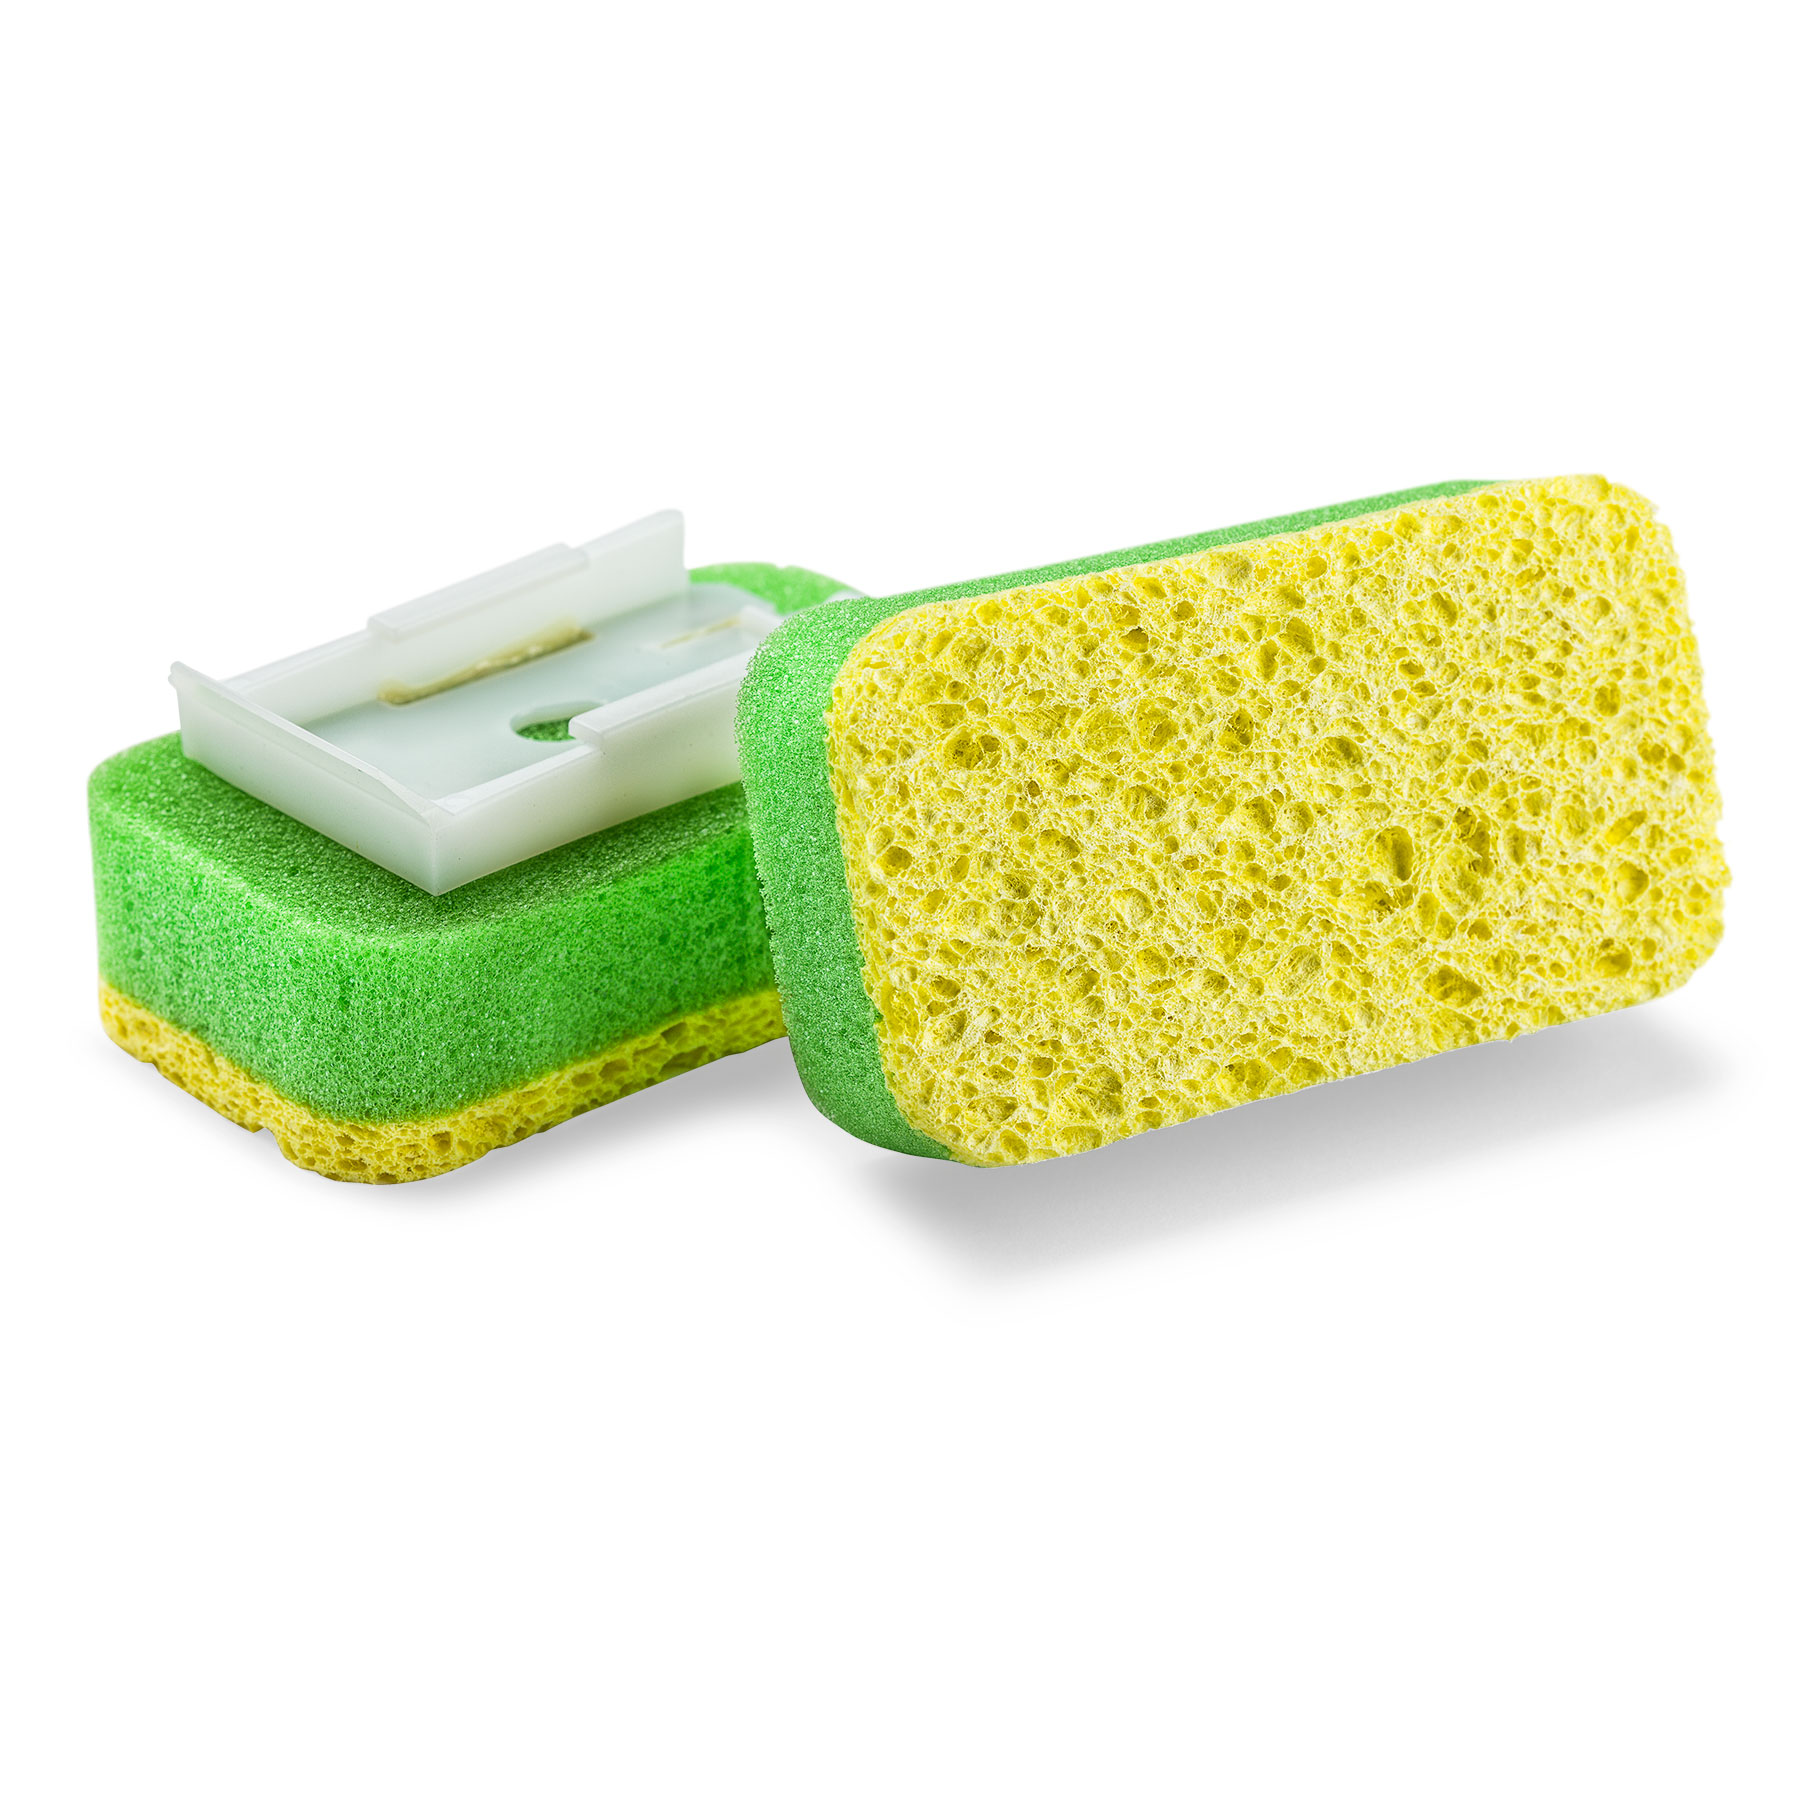 UPC 071736000312 product image for Libman Dish Sponge Refills, 2 refills | upcitemdb.com